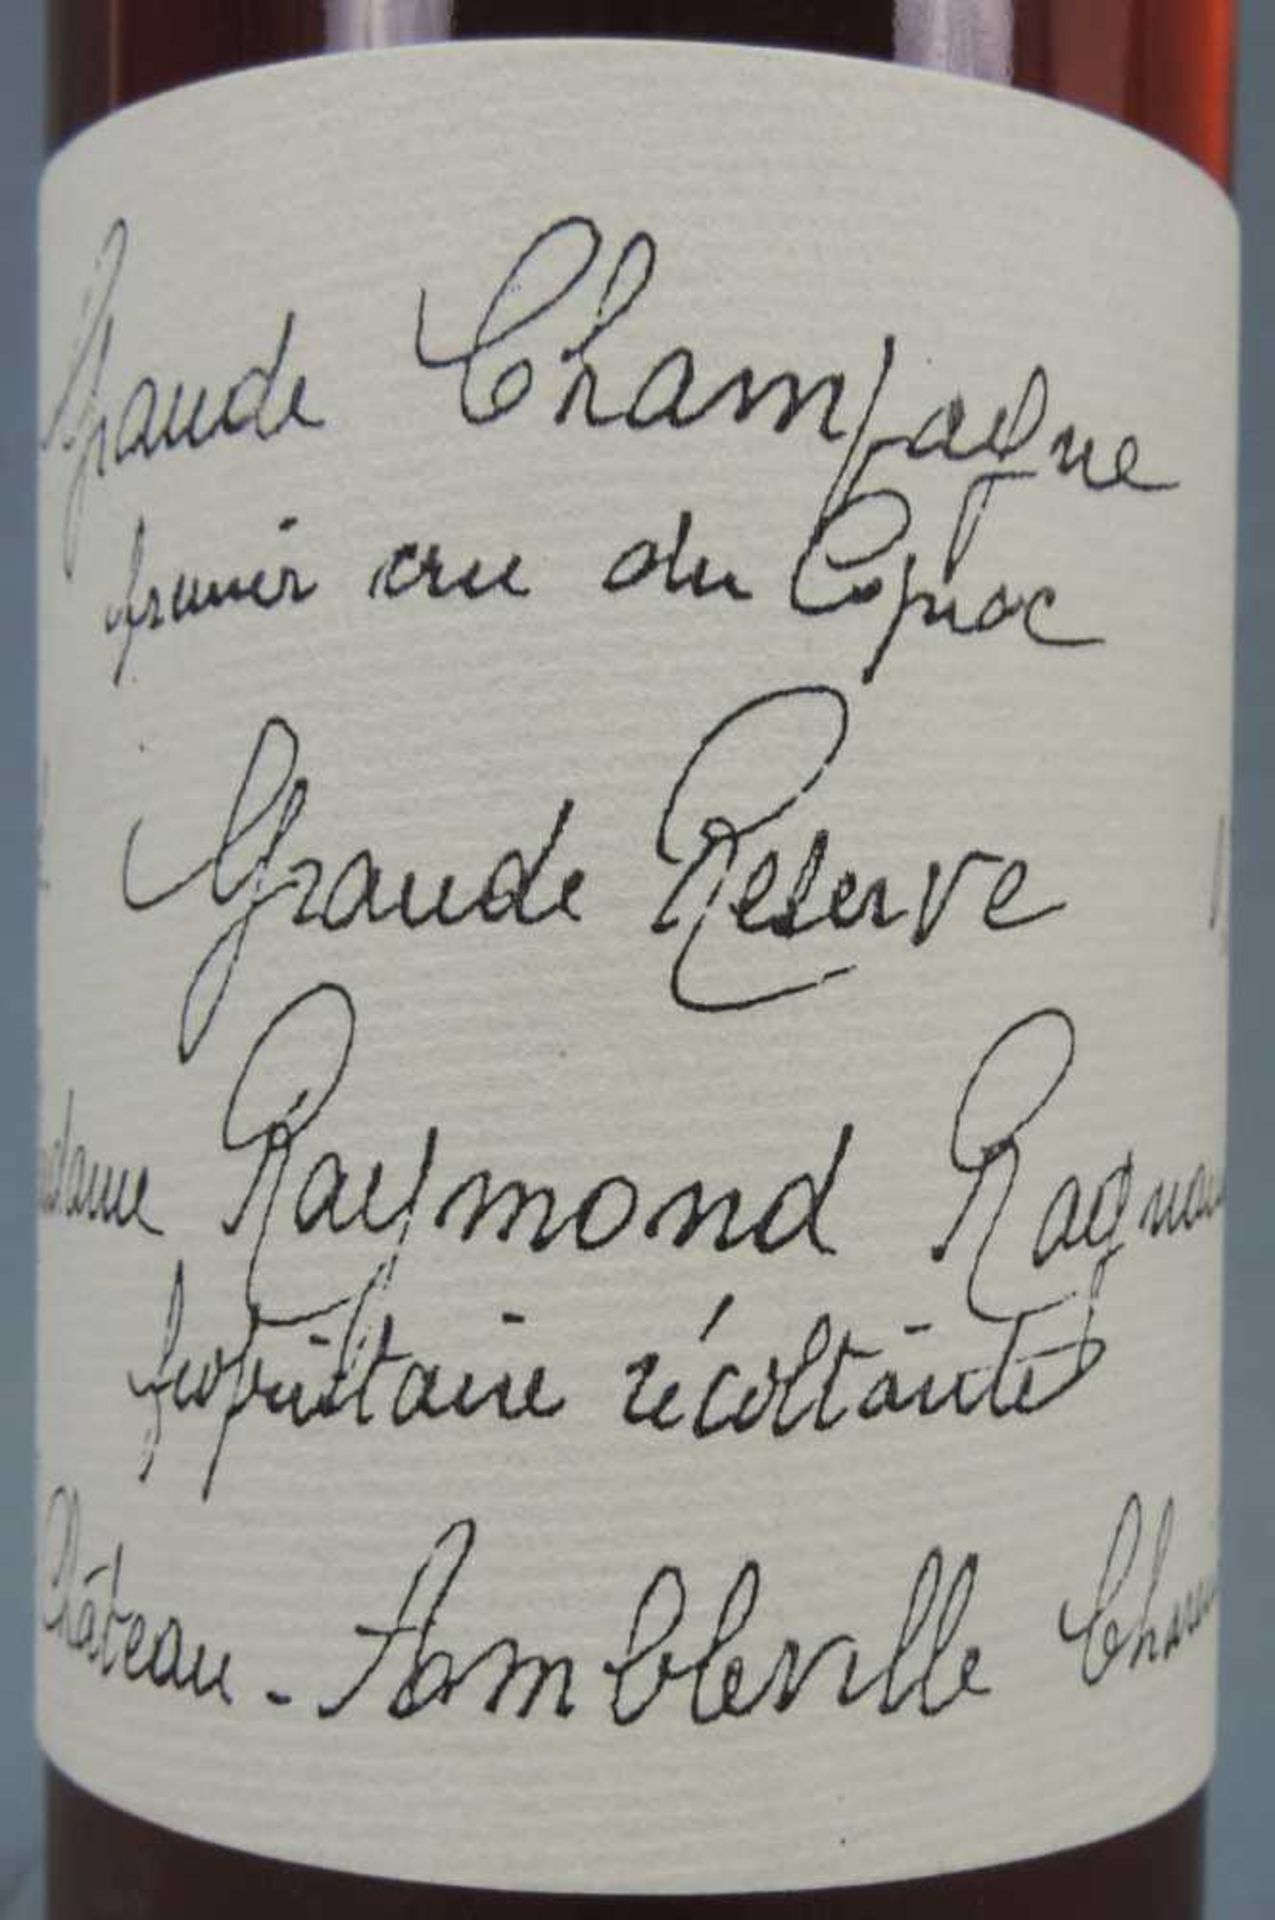 Grande Champagne Raymond Ragnaud Grande Reserve. 70cl. 41%. Grande Champagne Raymond Ragnaud - Image 2 of 4